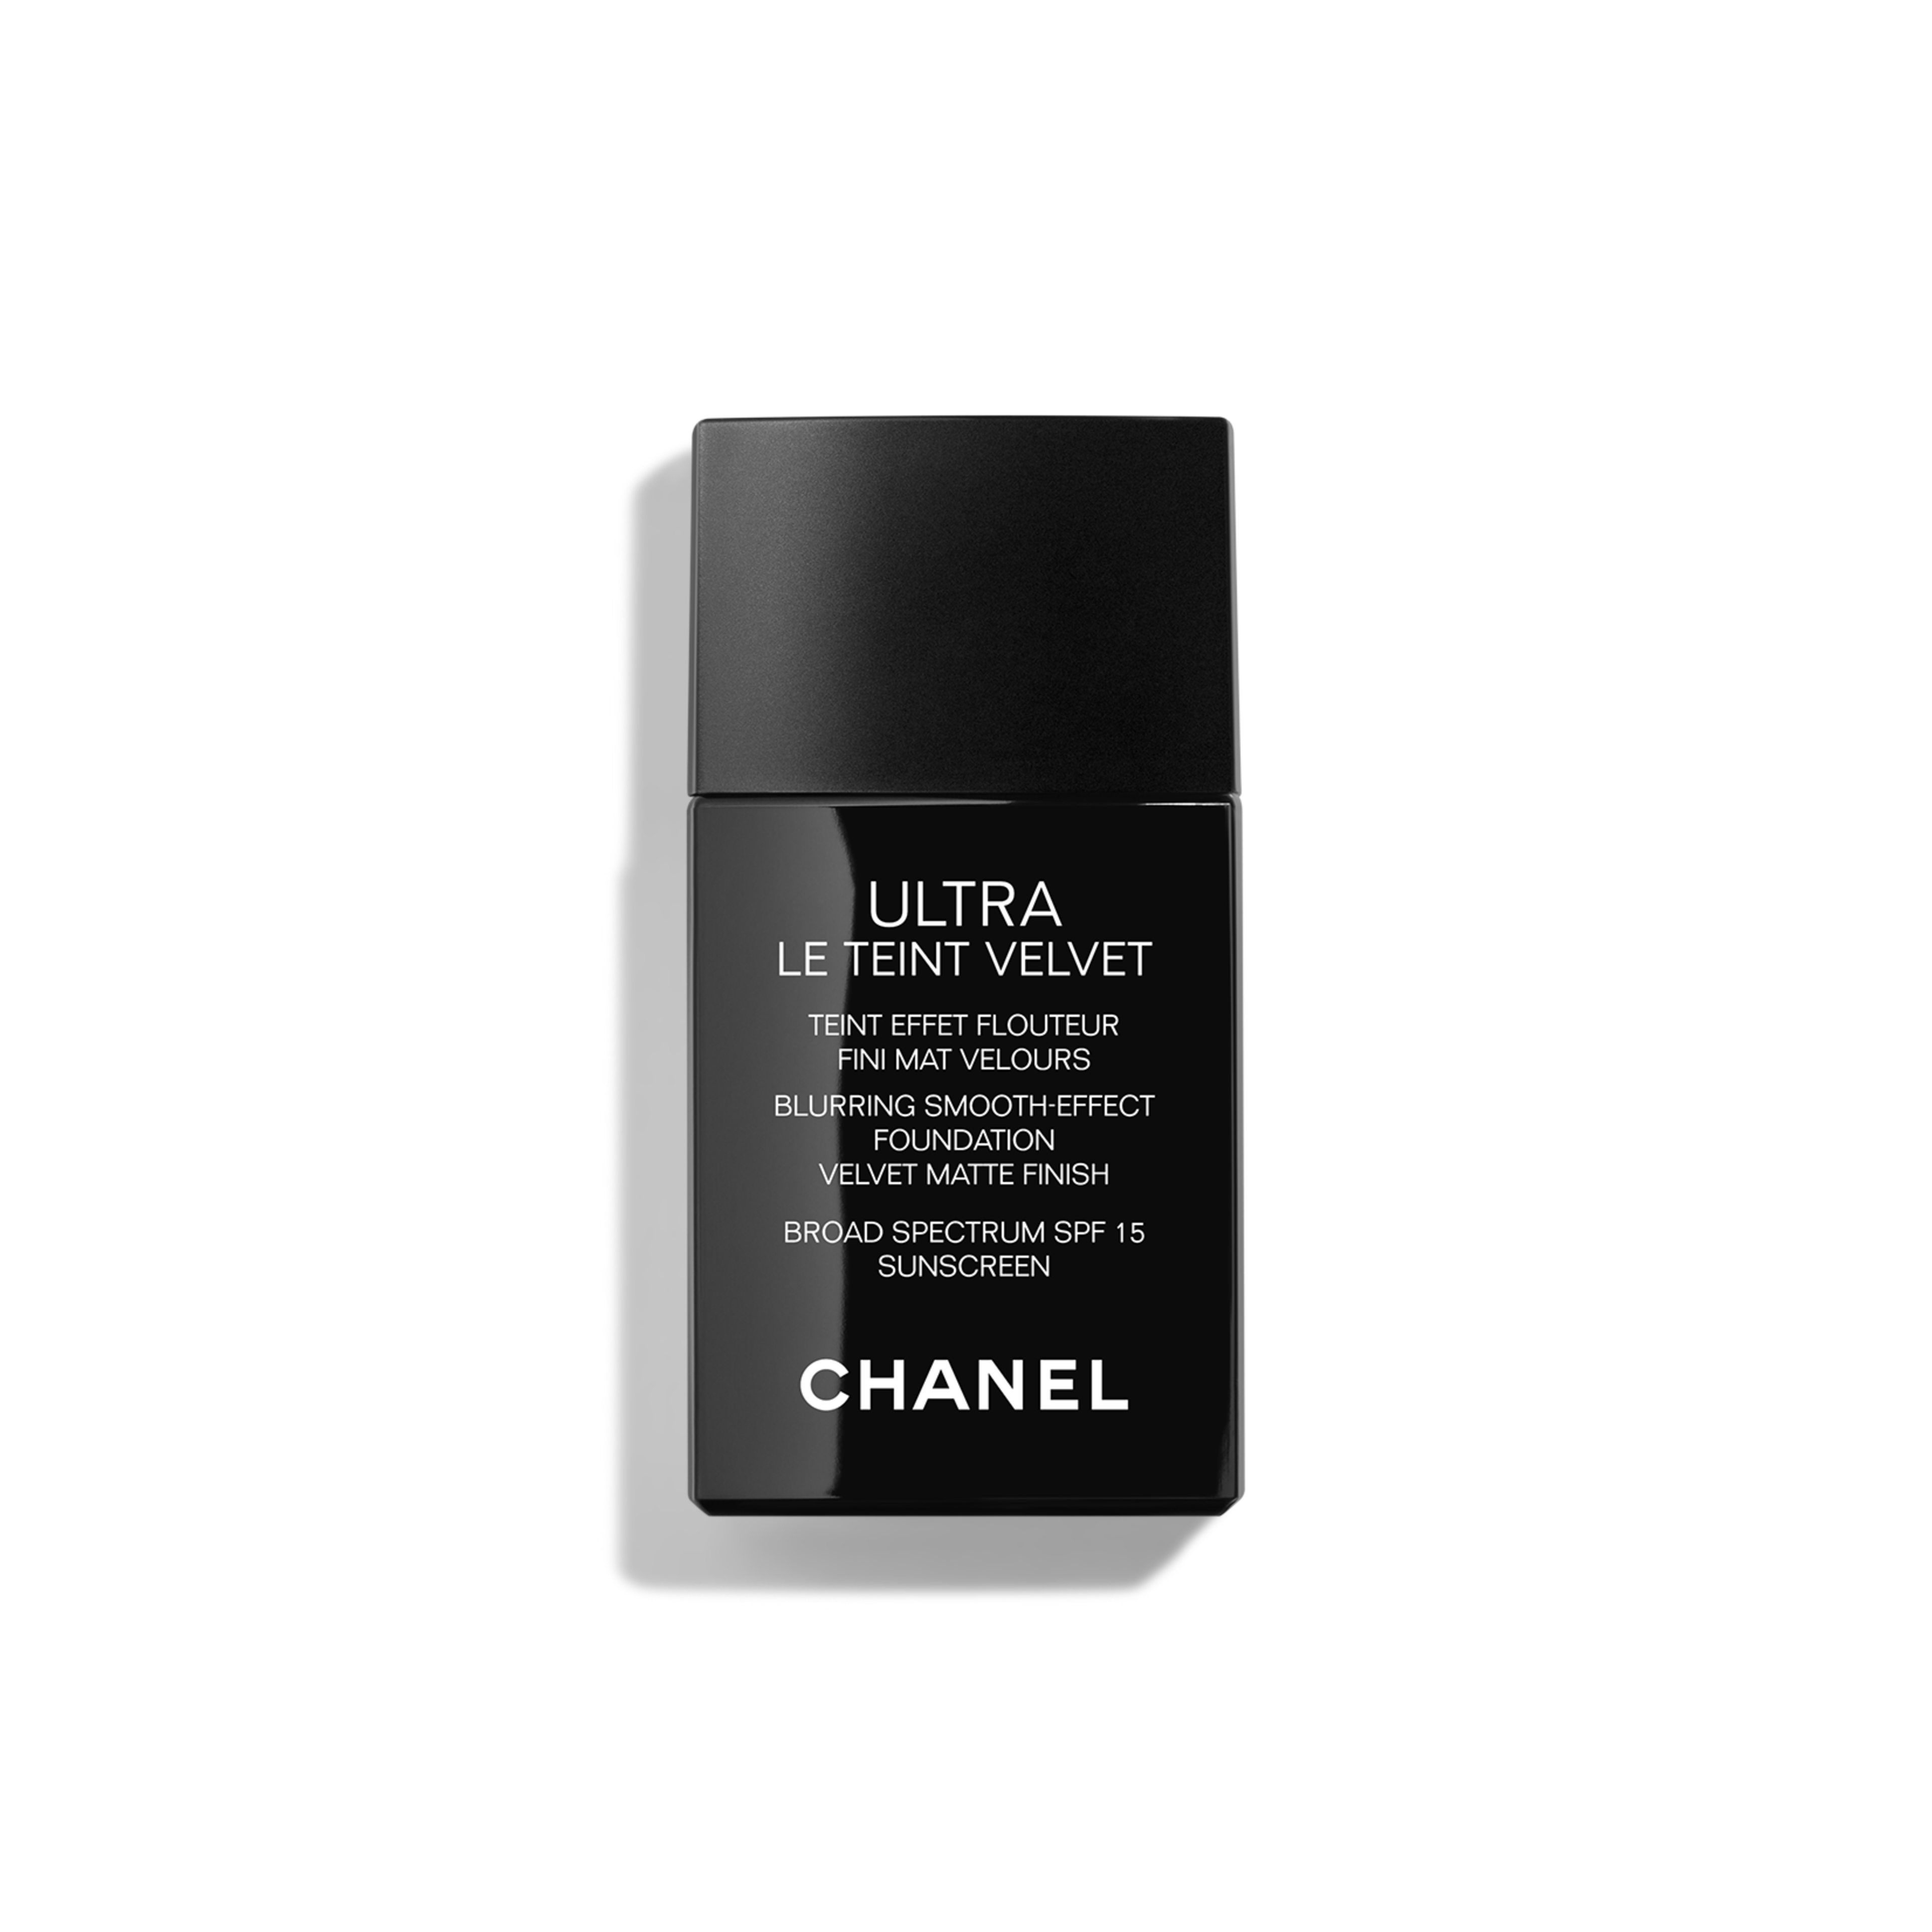 Blurring Smooth-Effect Foundation Velvet Matte Finish Broad Spectrum SPF 15 Sunscreen | Chanel, Inc. (US)